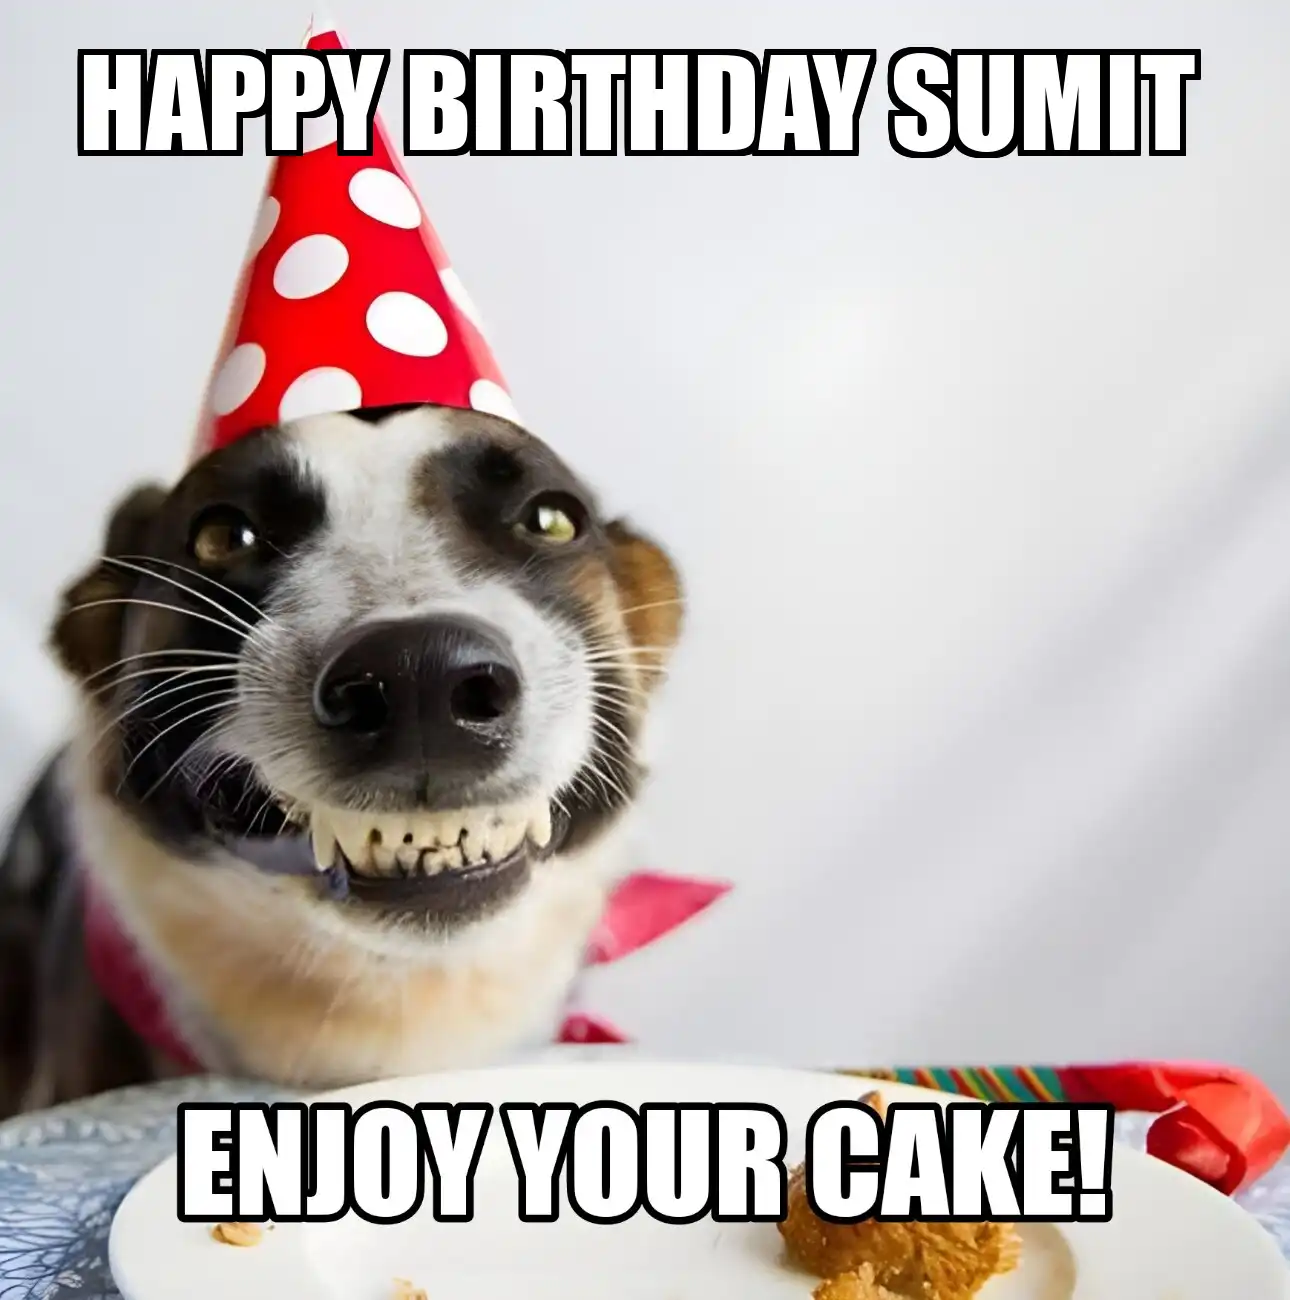 Happy Birthday Sumit Enjoy Your Cake Dog Meme